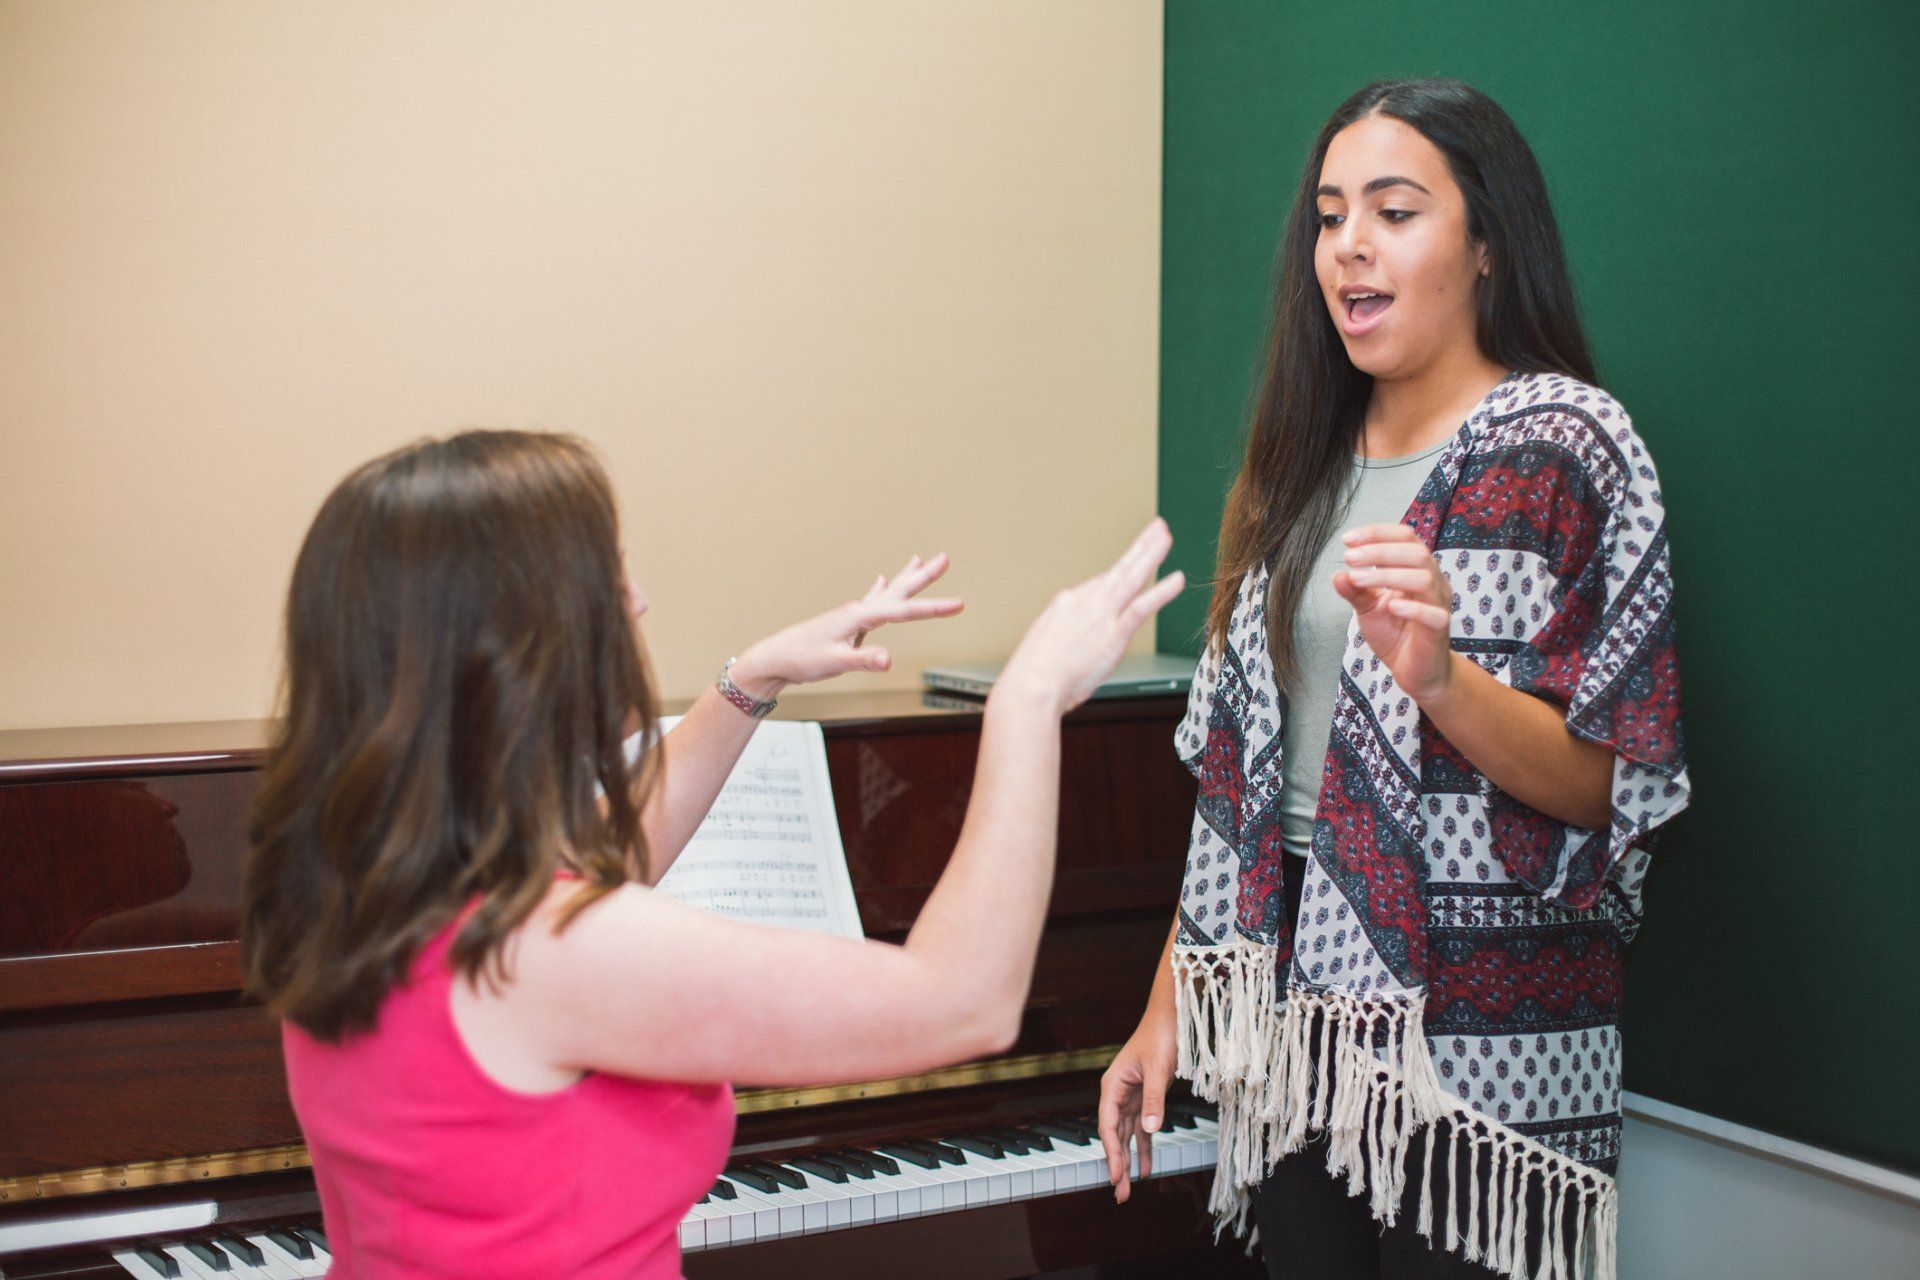 Voice lessons in progress in Louisville, KY